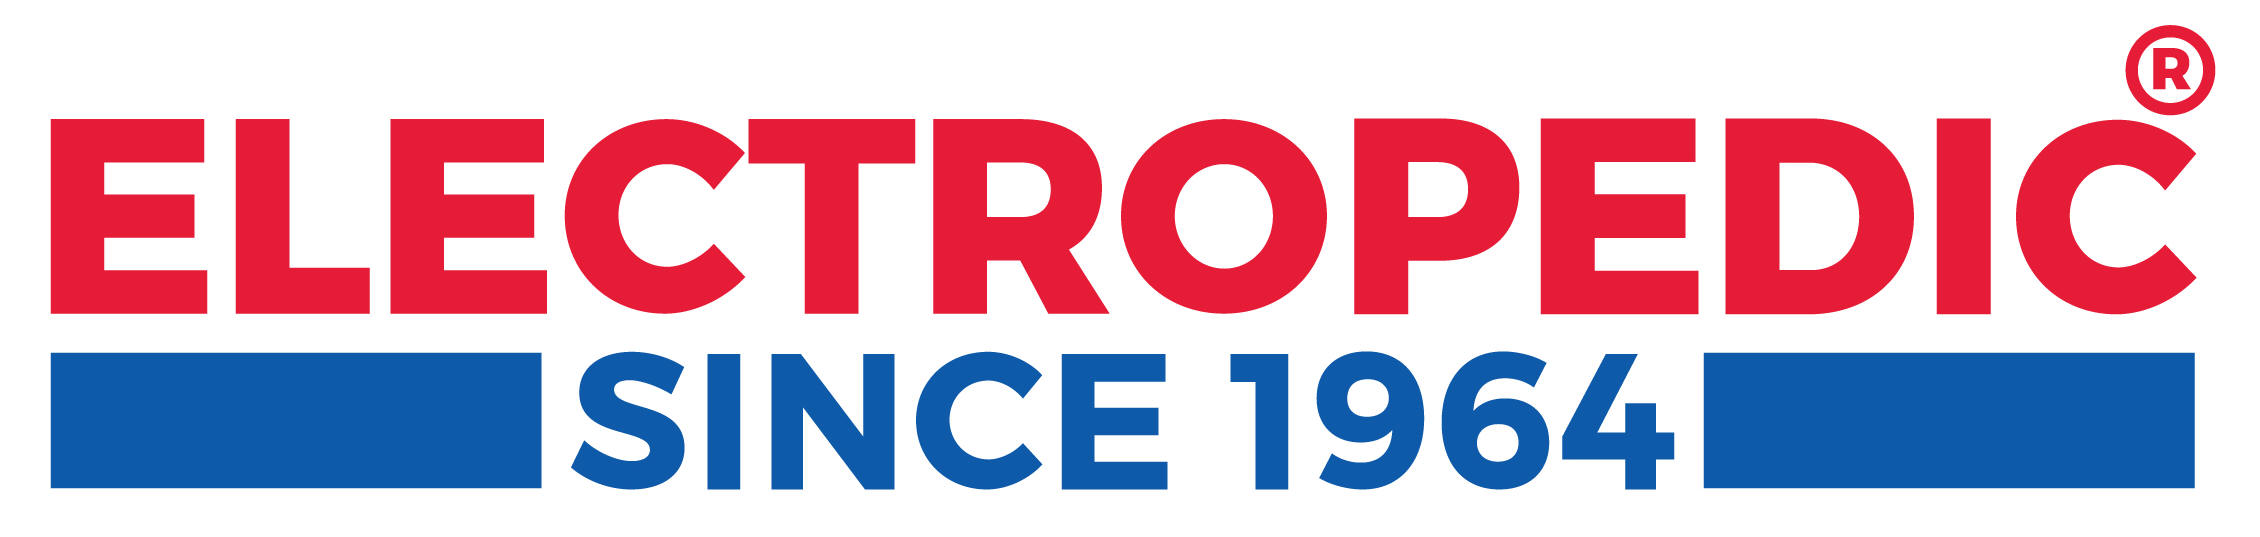 Brea Electropedic-Logo